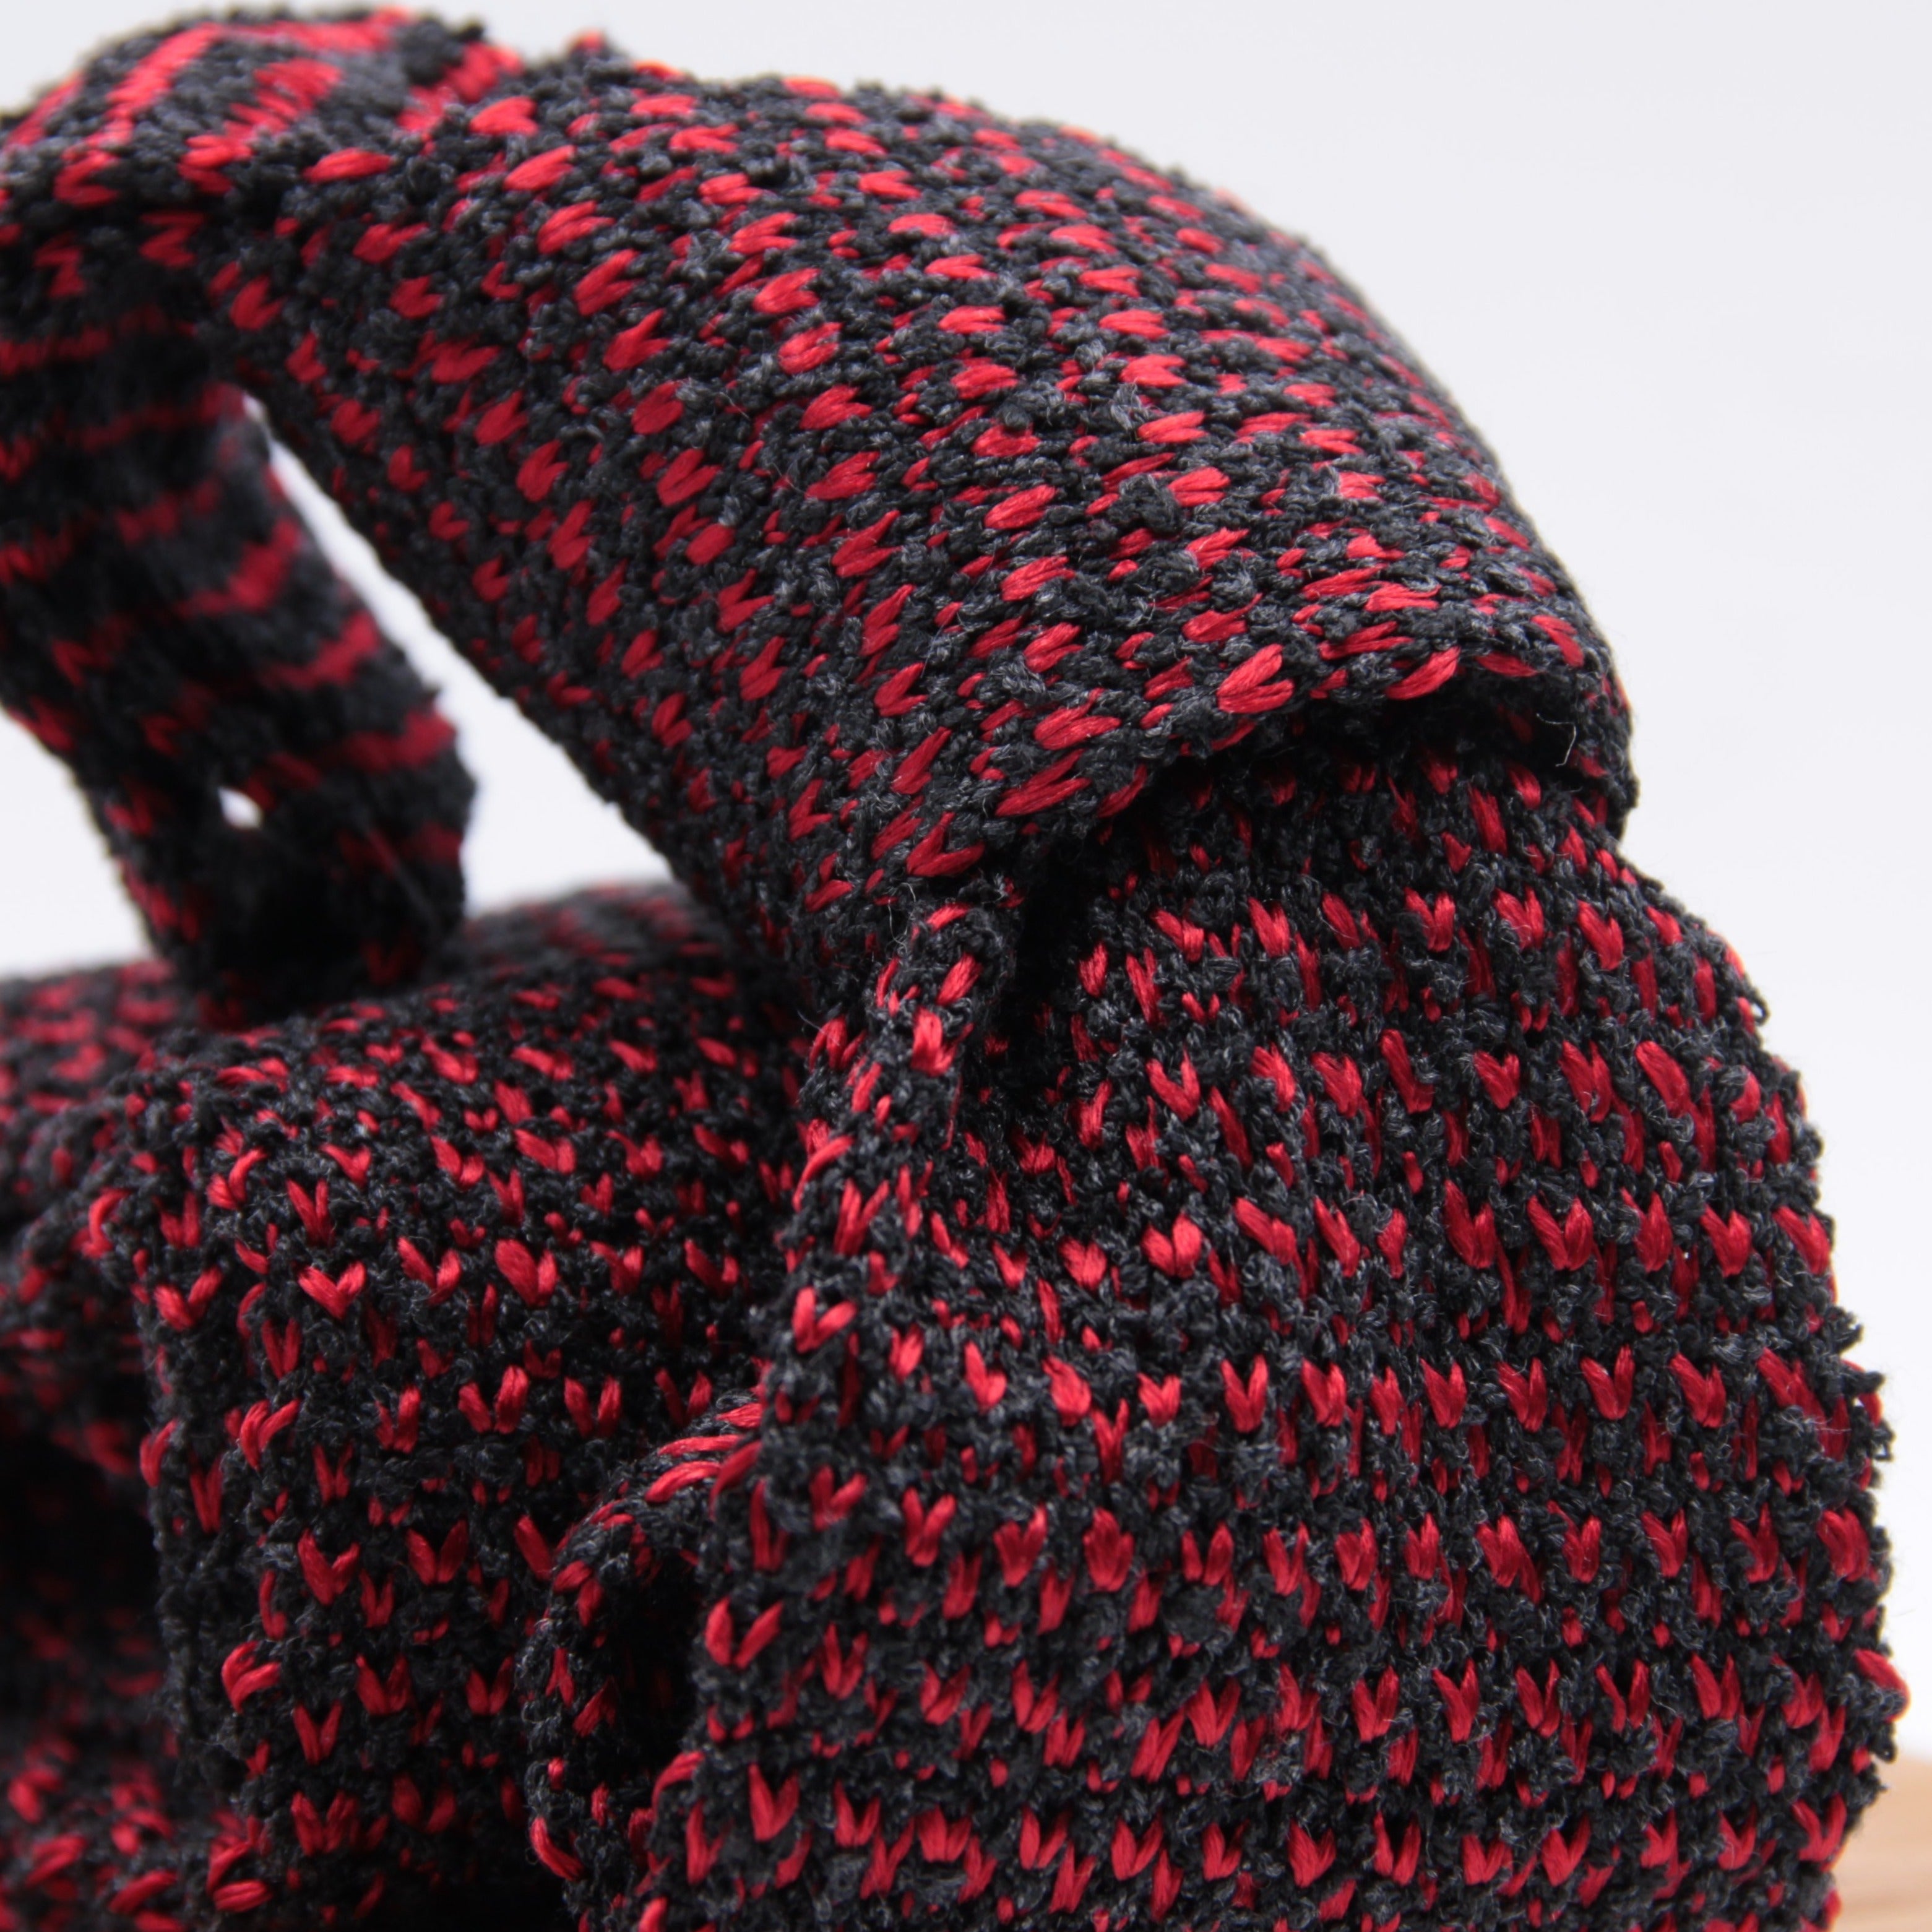 Cruciani & Bella 100% Silk Red and Dark Grey knitted tie Handmade in Italy 6 cm x 147 cm #6092